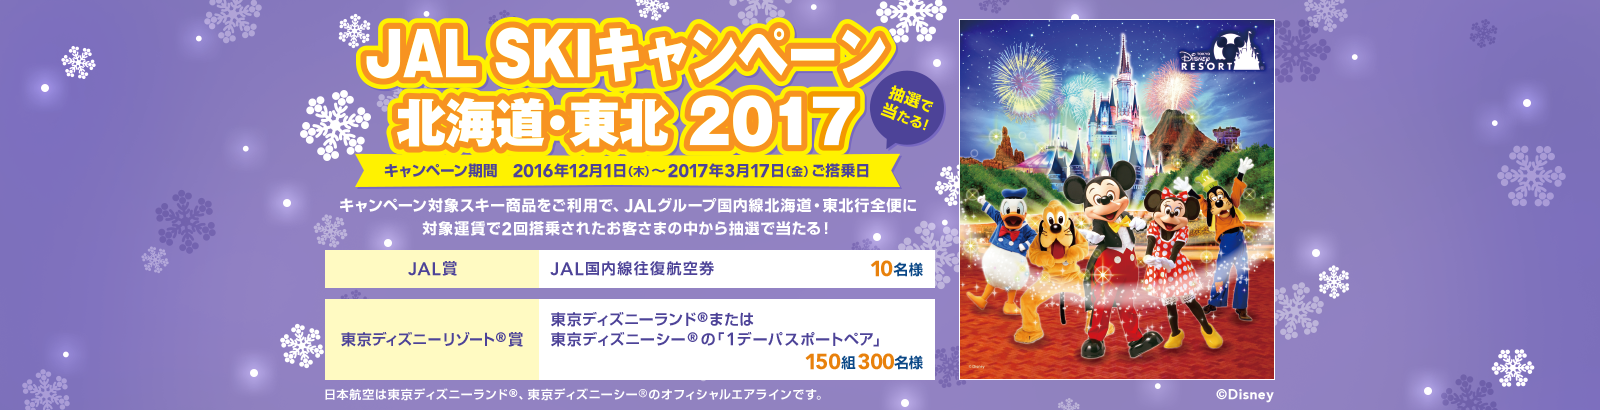 JAL SKIキャンペーン北海道・東北2017